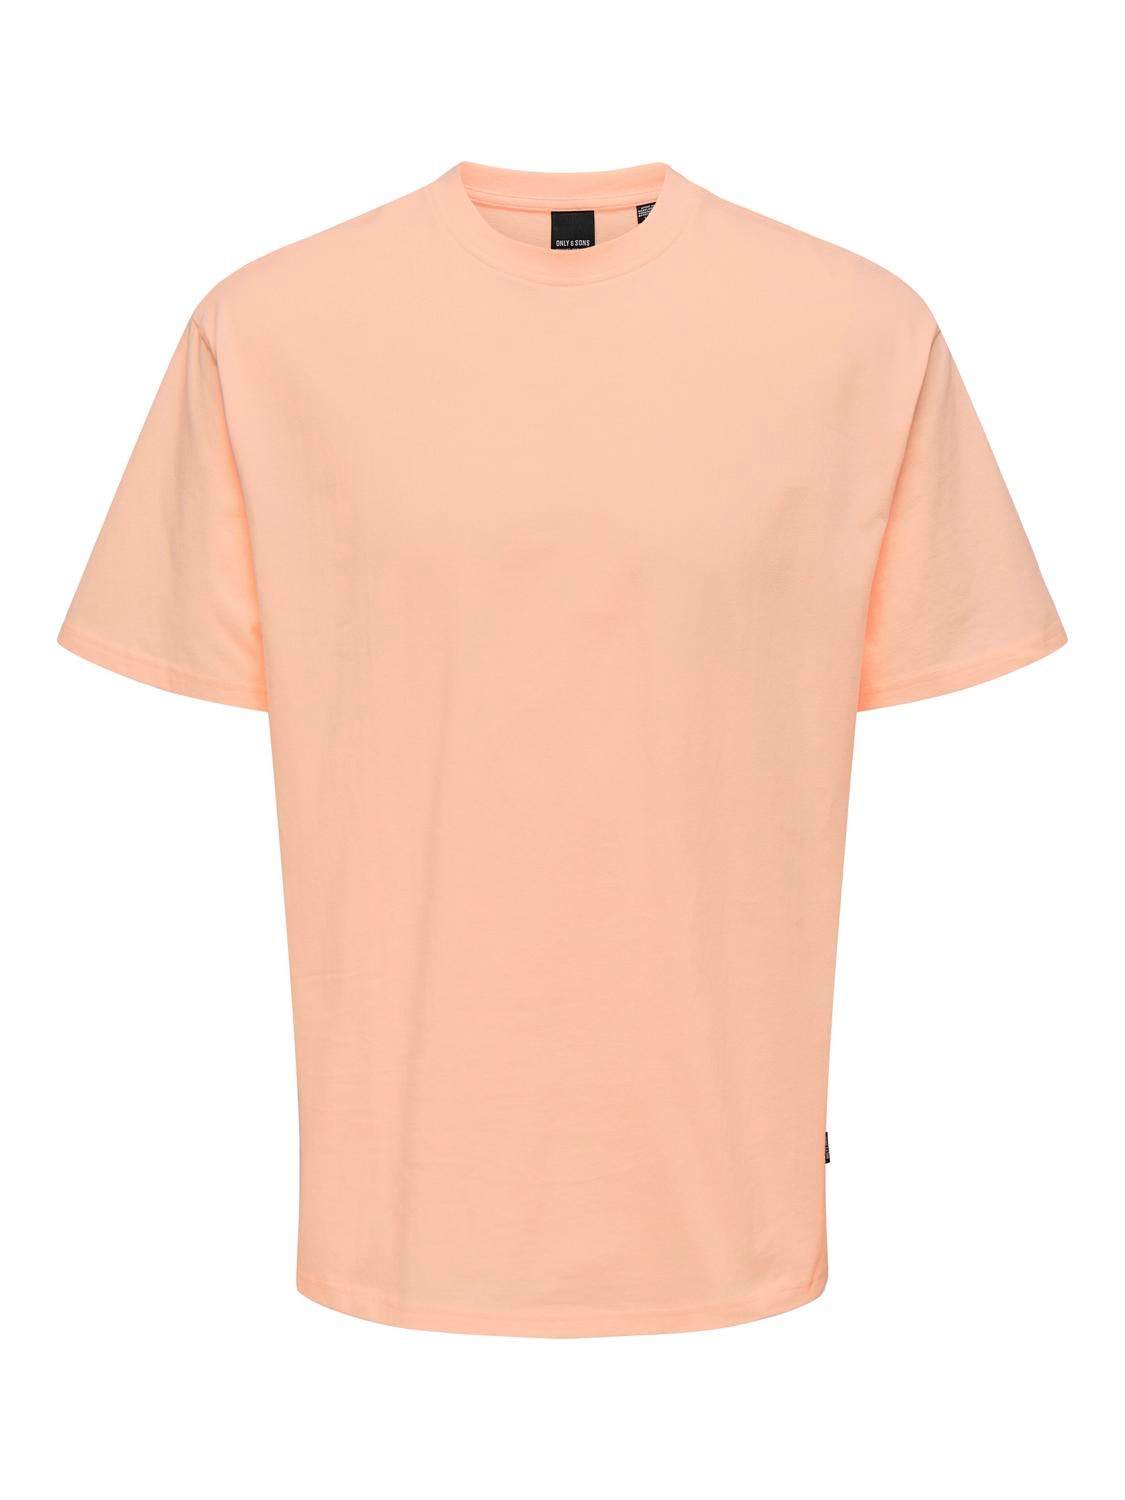 Marks & Spencer RELAXED FIT CREW NECK - Basic T-shirt - peach/apricot -  Zalando.de